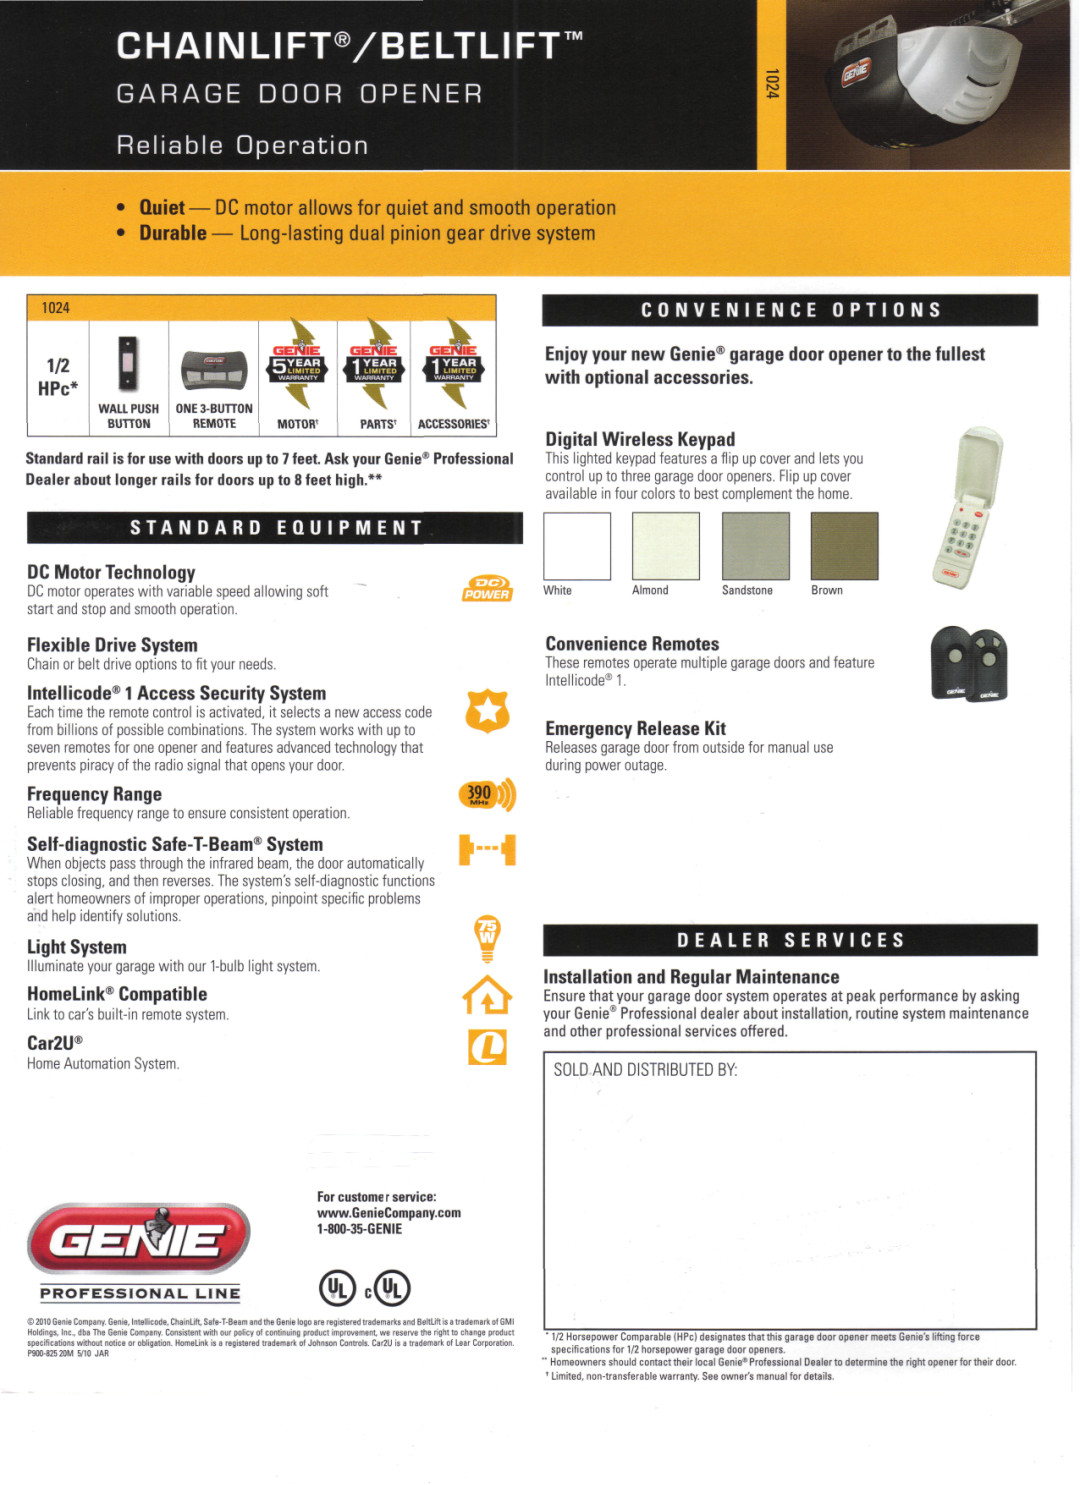 Genie manual Homelink and Car2U compatible, Model 1022/1024, 1.800.354.3643, Includes Remote Control 